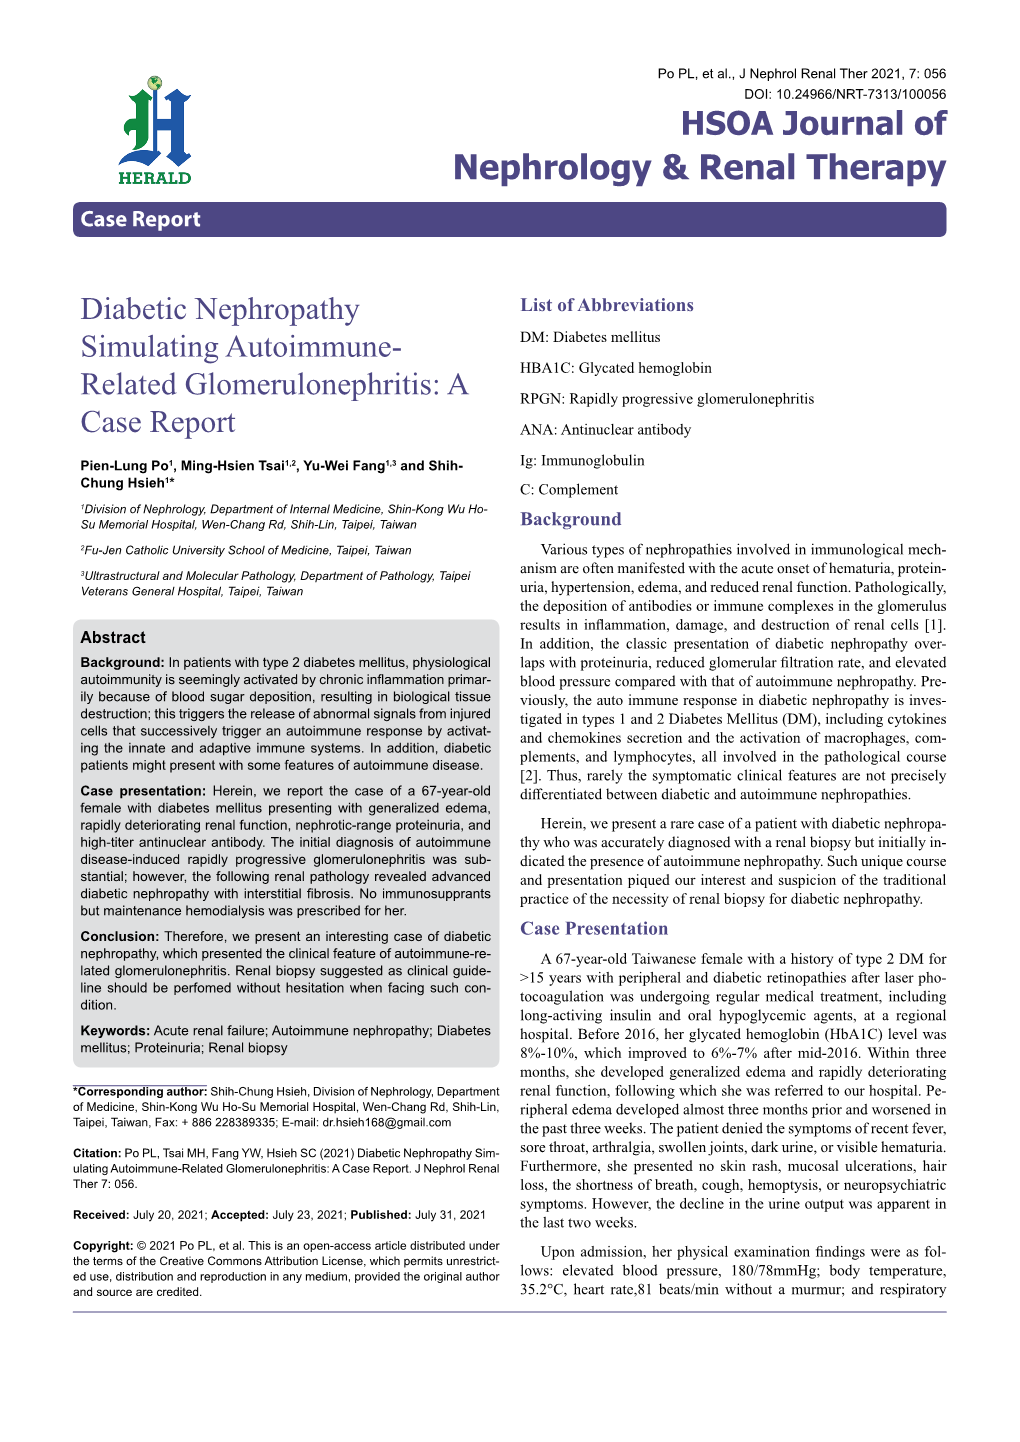 Diabetic Nephropathy Simulating Autoimmune-Related Glomerulonephritis: a Case Report